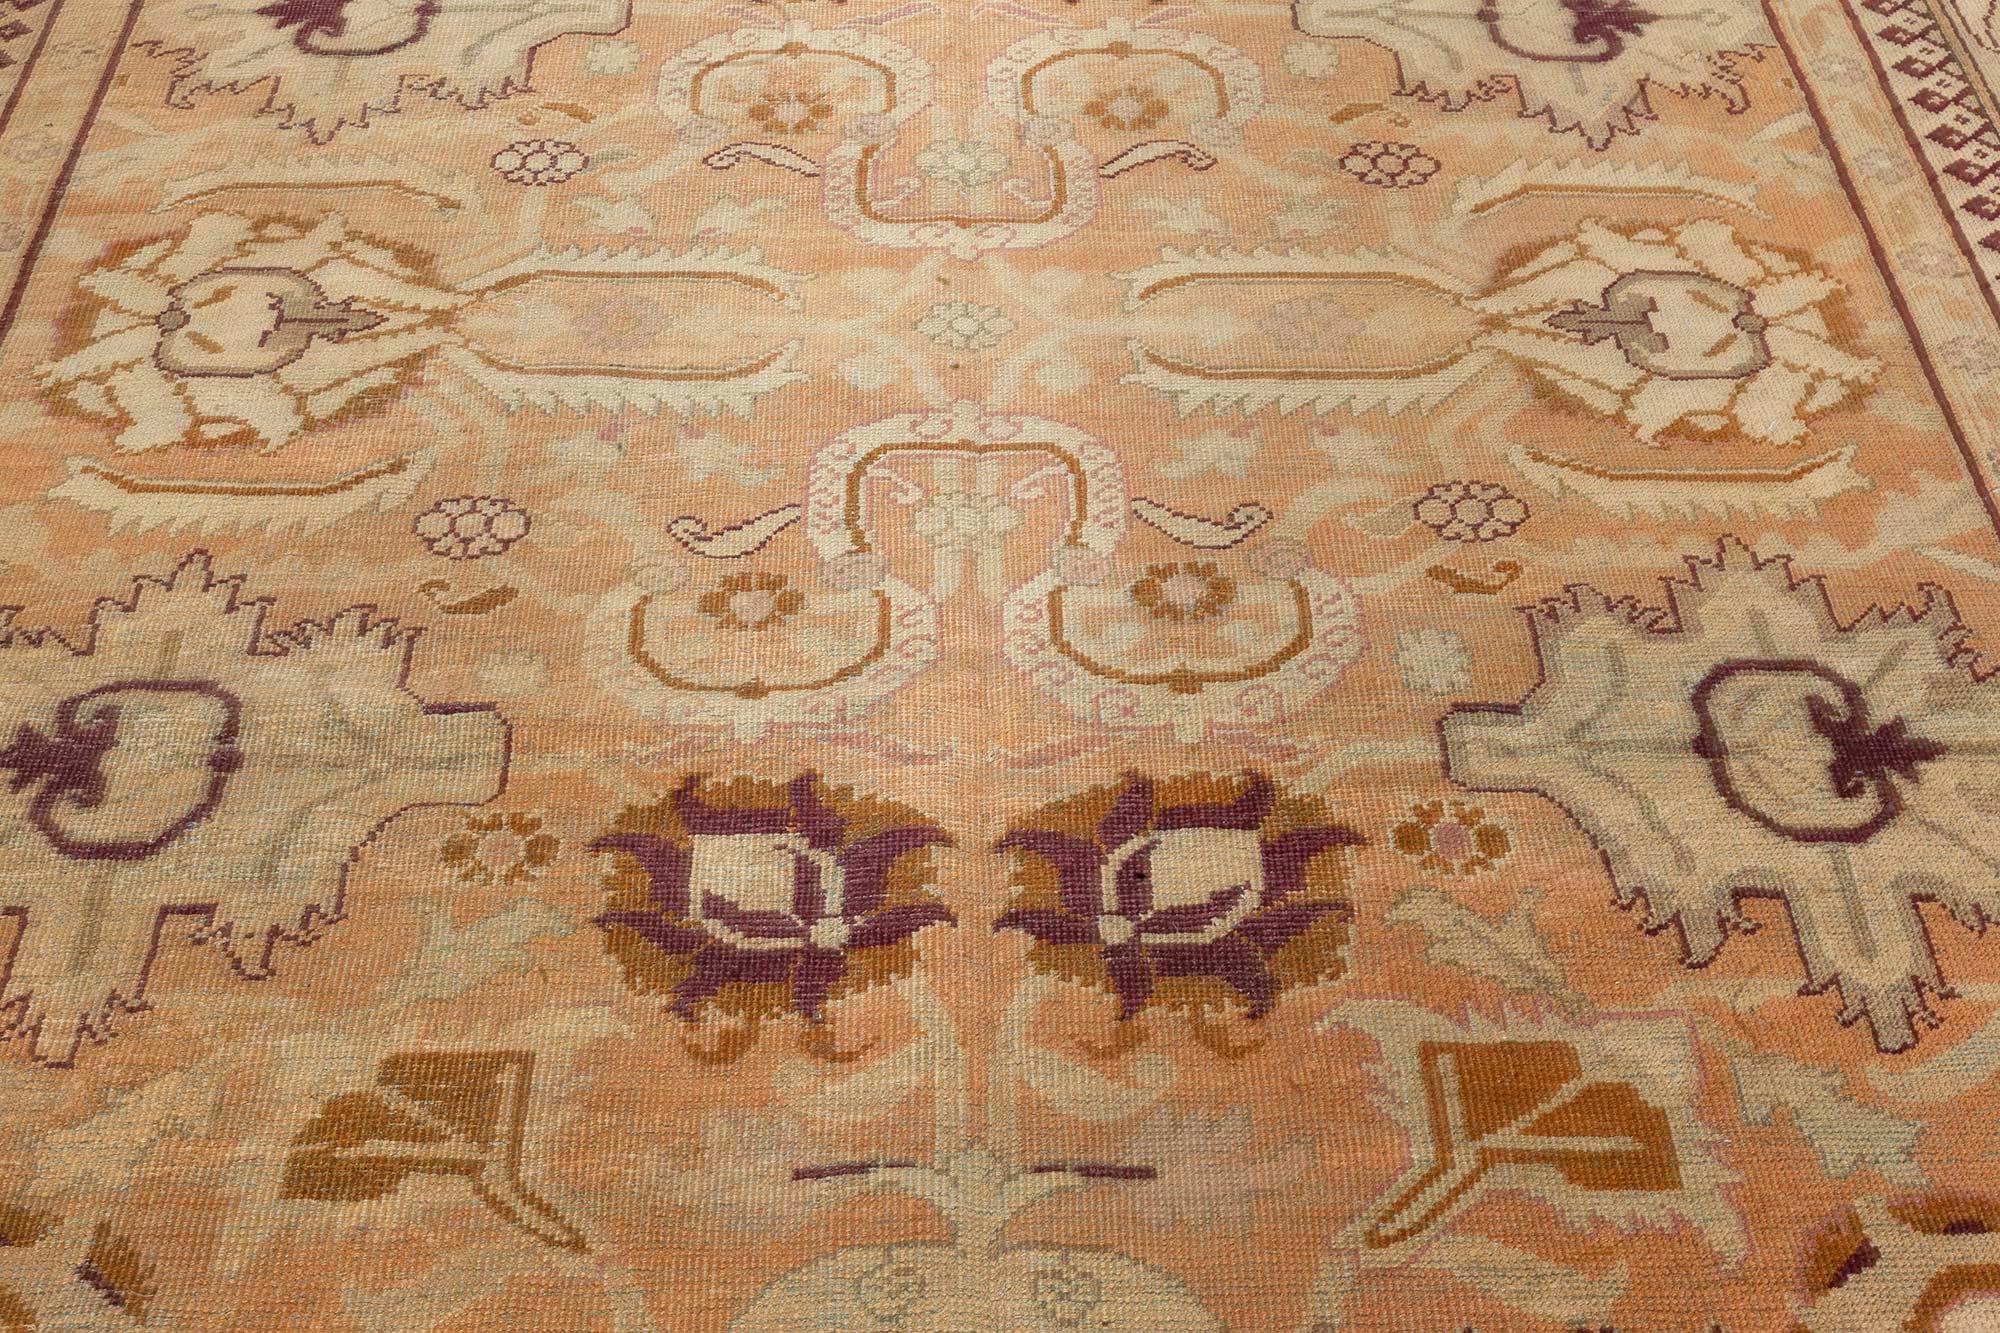 Late 19th century Indian Amritsar botanic handmade wool rug
Size: 7'9